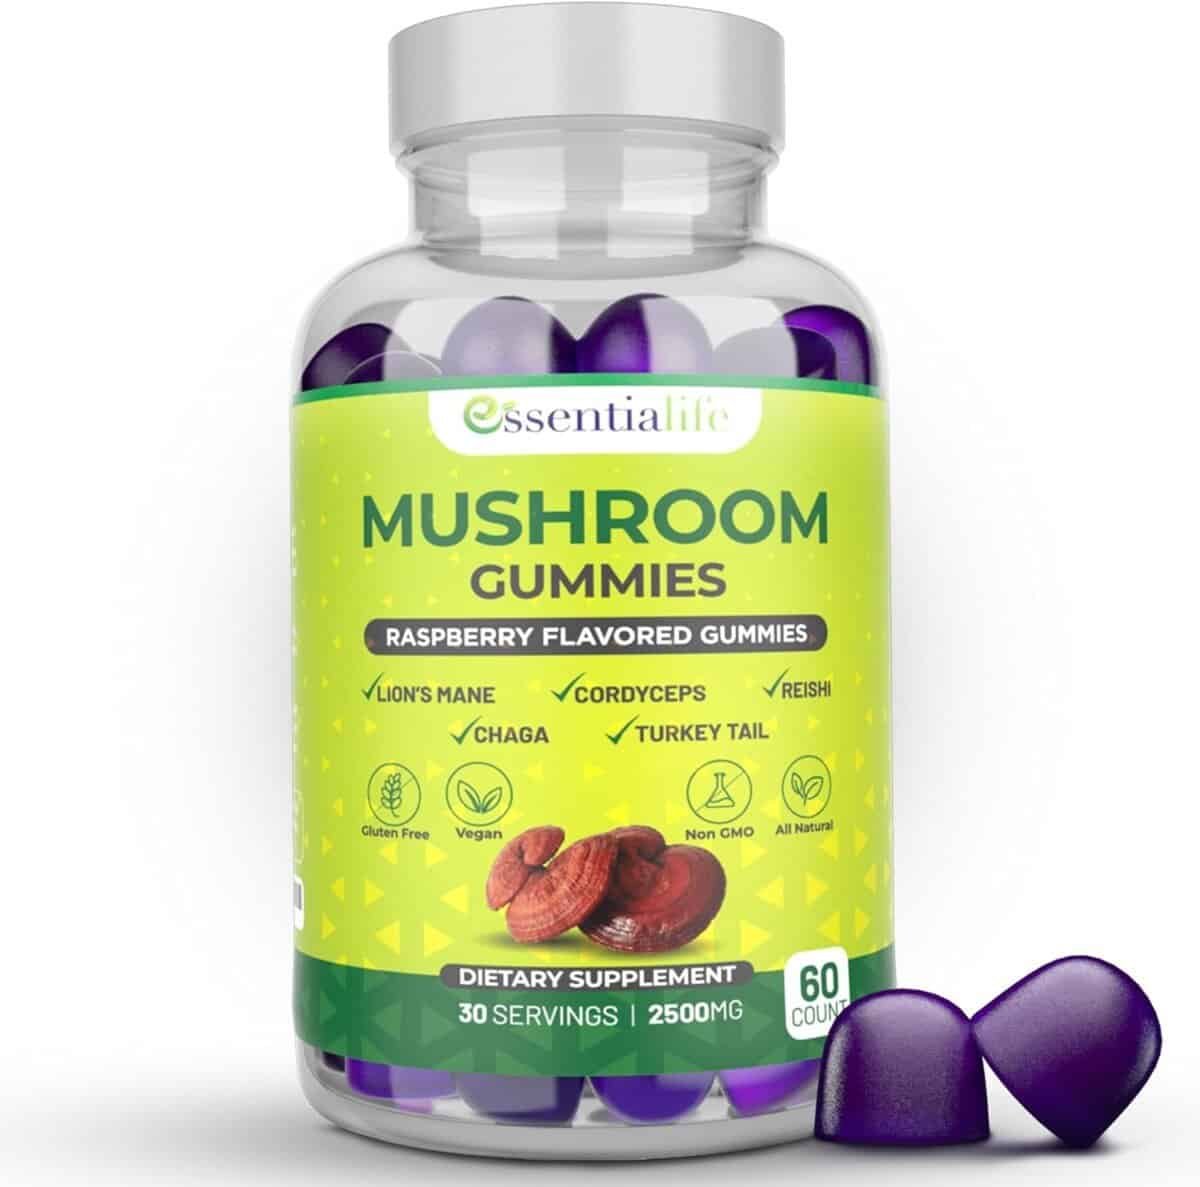 Essentialife Lions Mane Mushroom Supplement Review